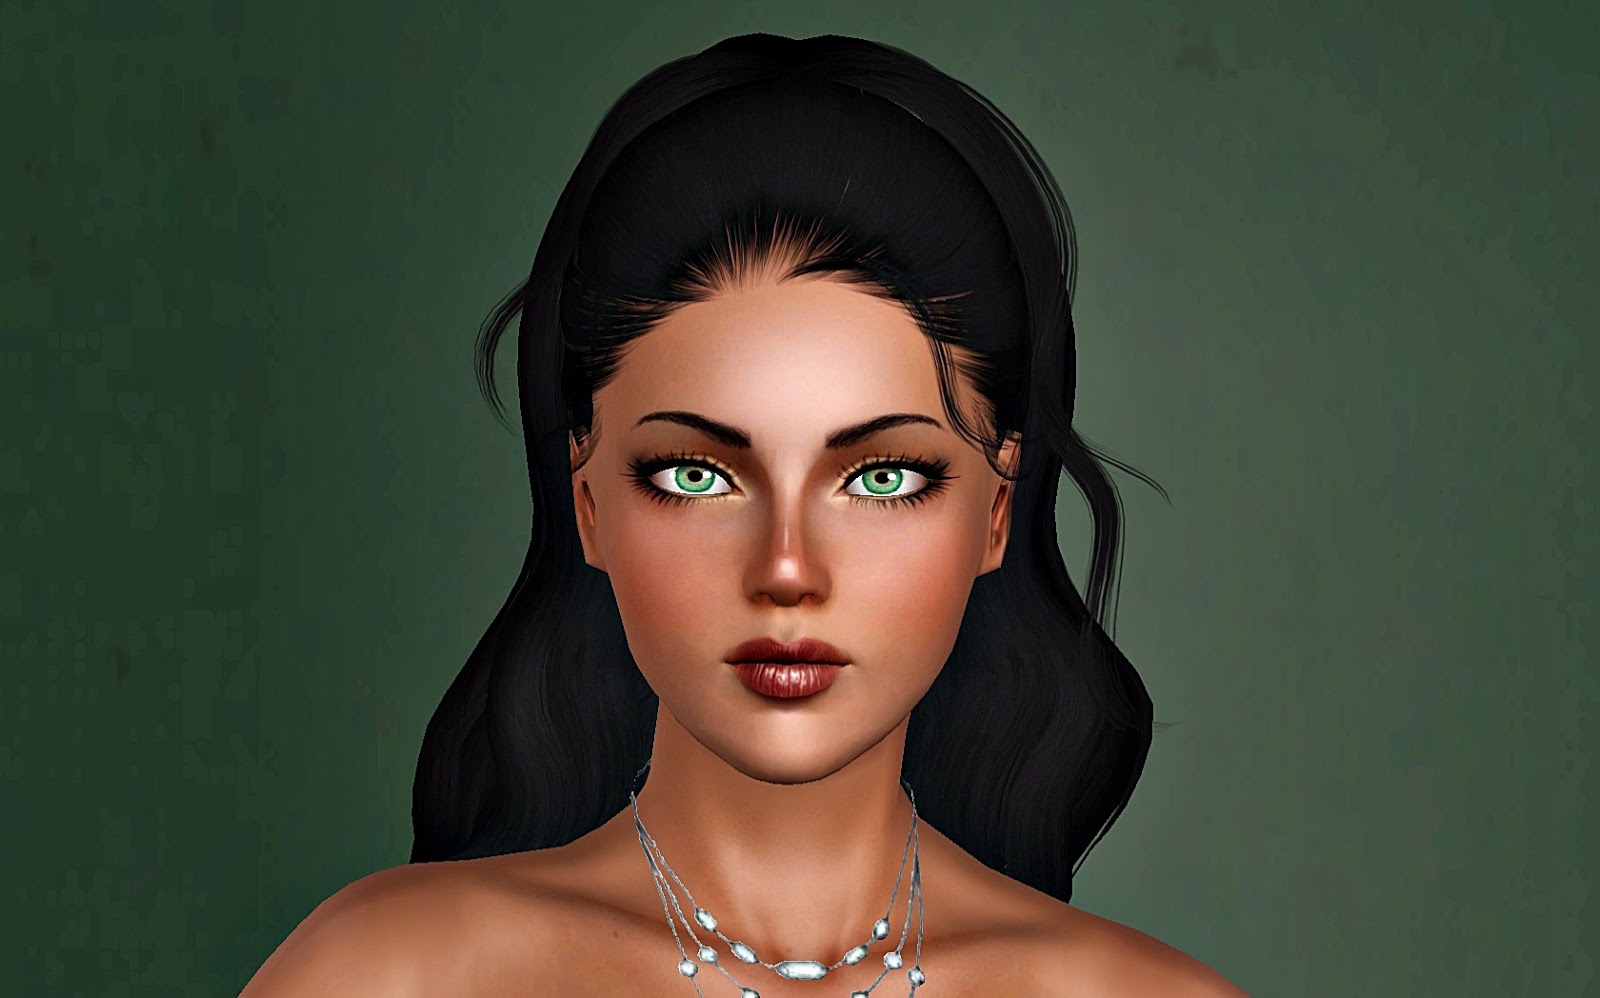 [Sims 3] ¿Compartís sims? 2